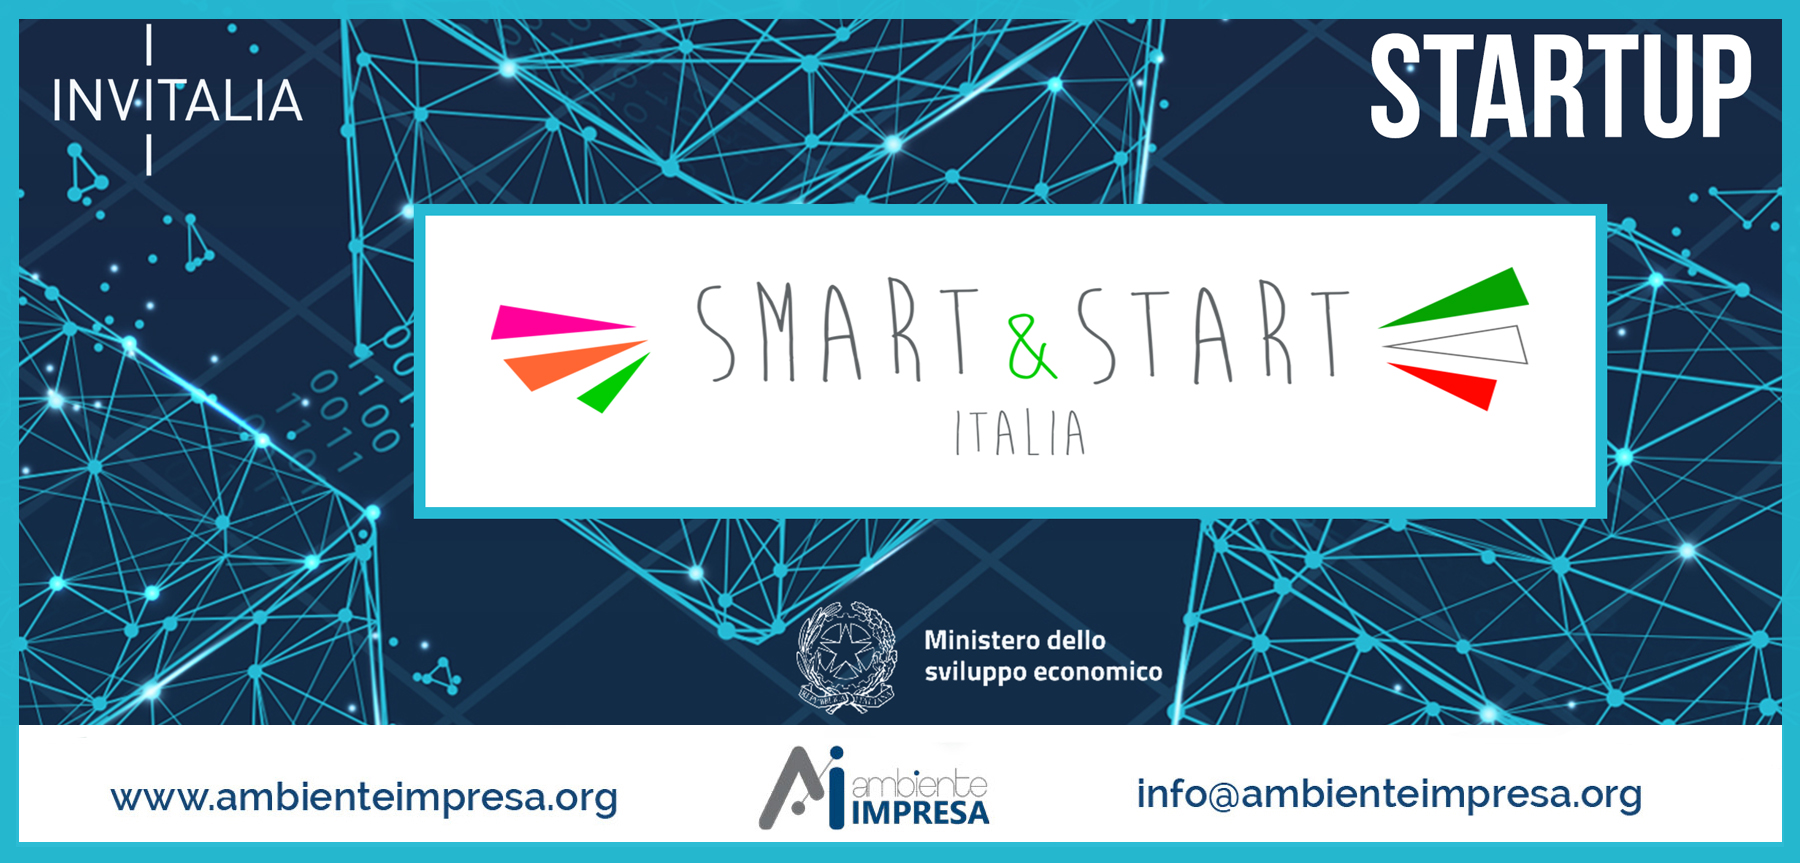 SMART & START  ITALIA  - Startup Innovative - Ambiente Impresa srl - Cagliari